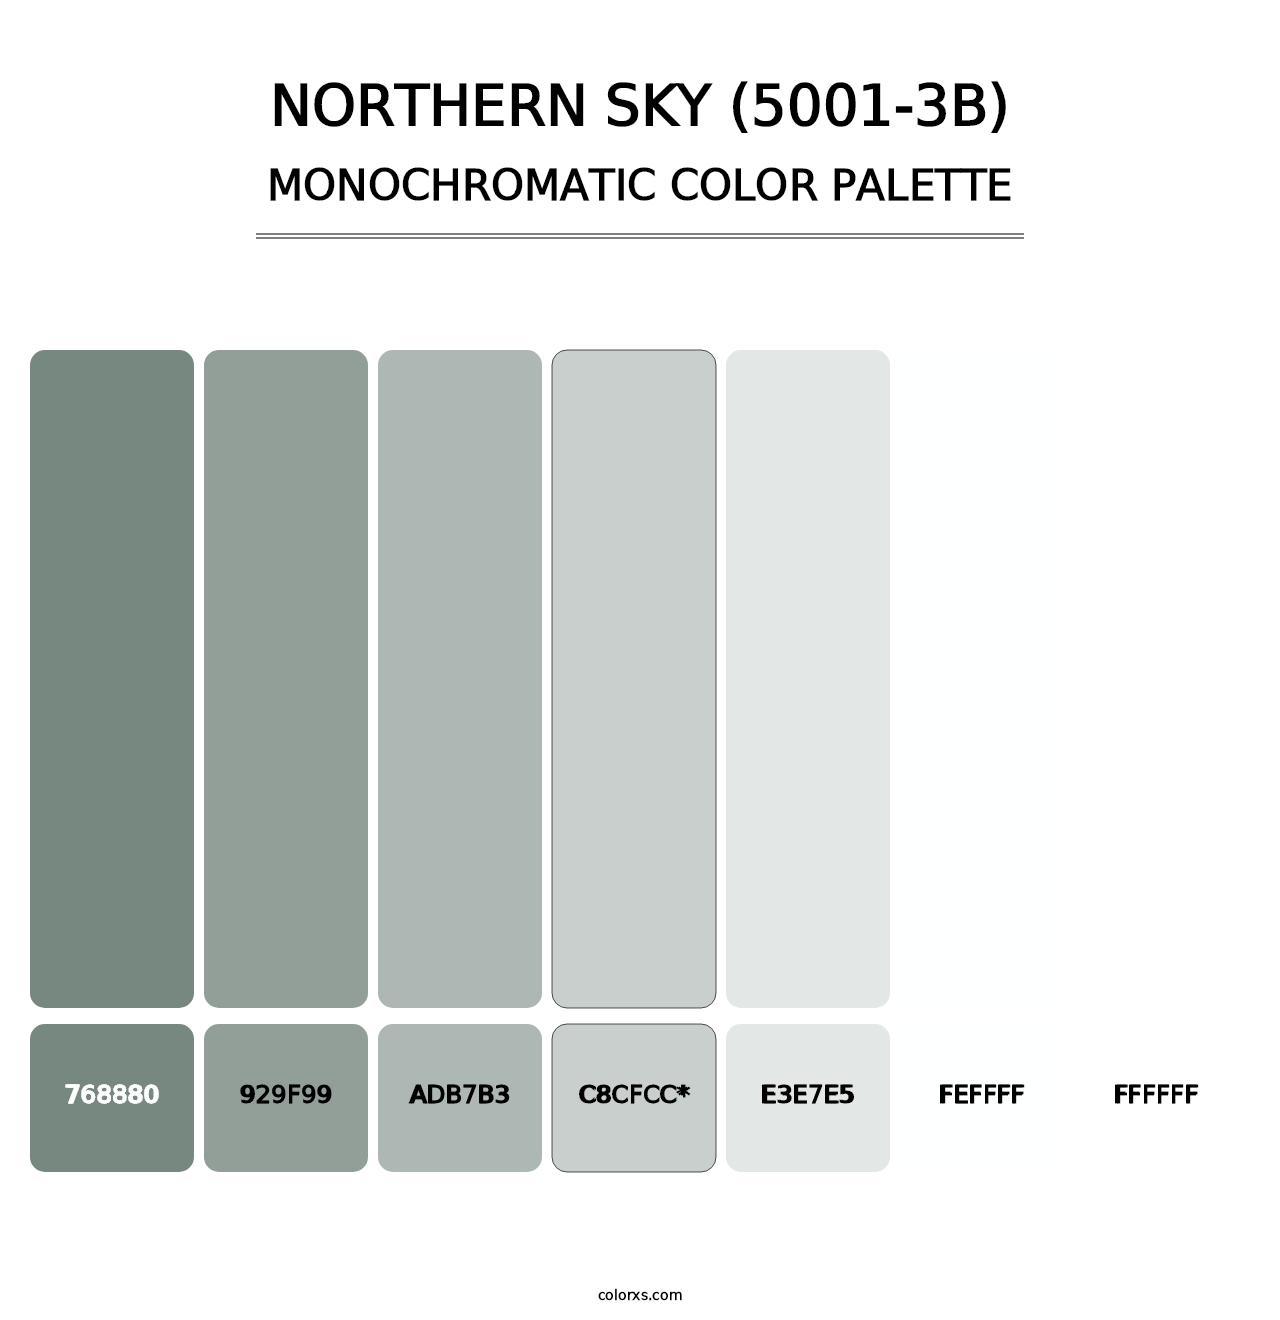 Northern Sky (5001-3B) - Monochromatic Color Palette